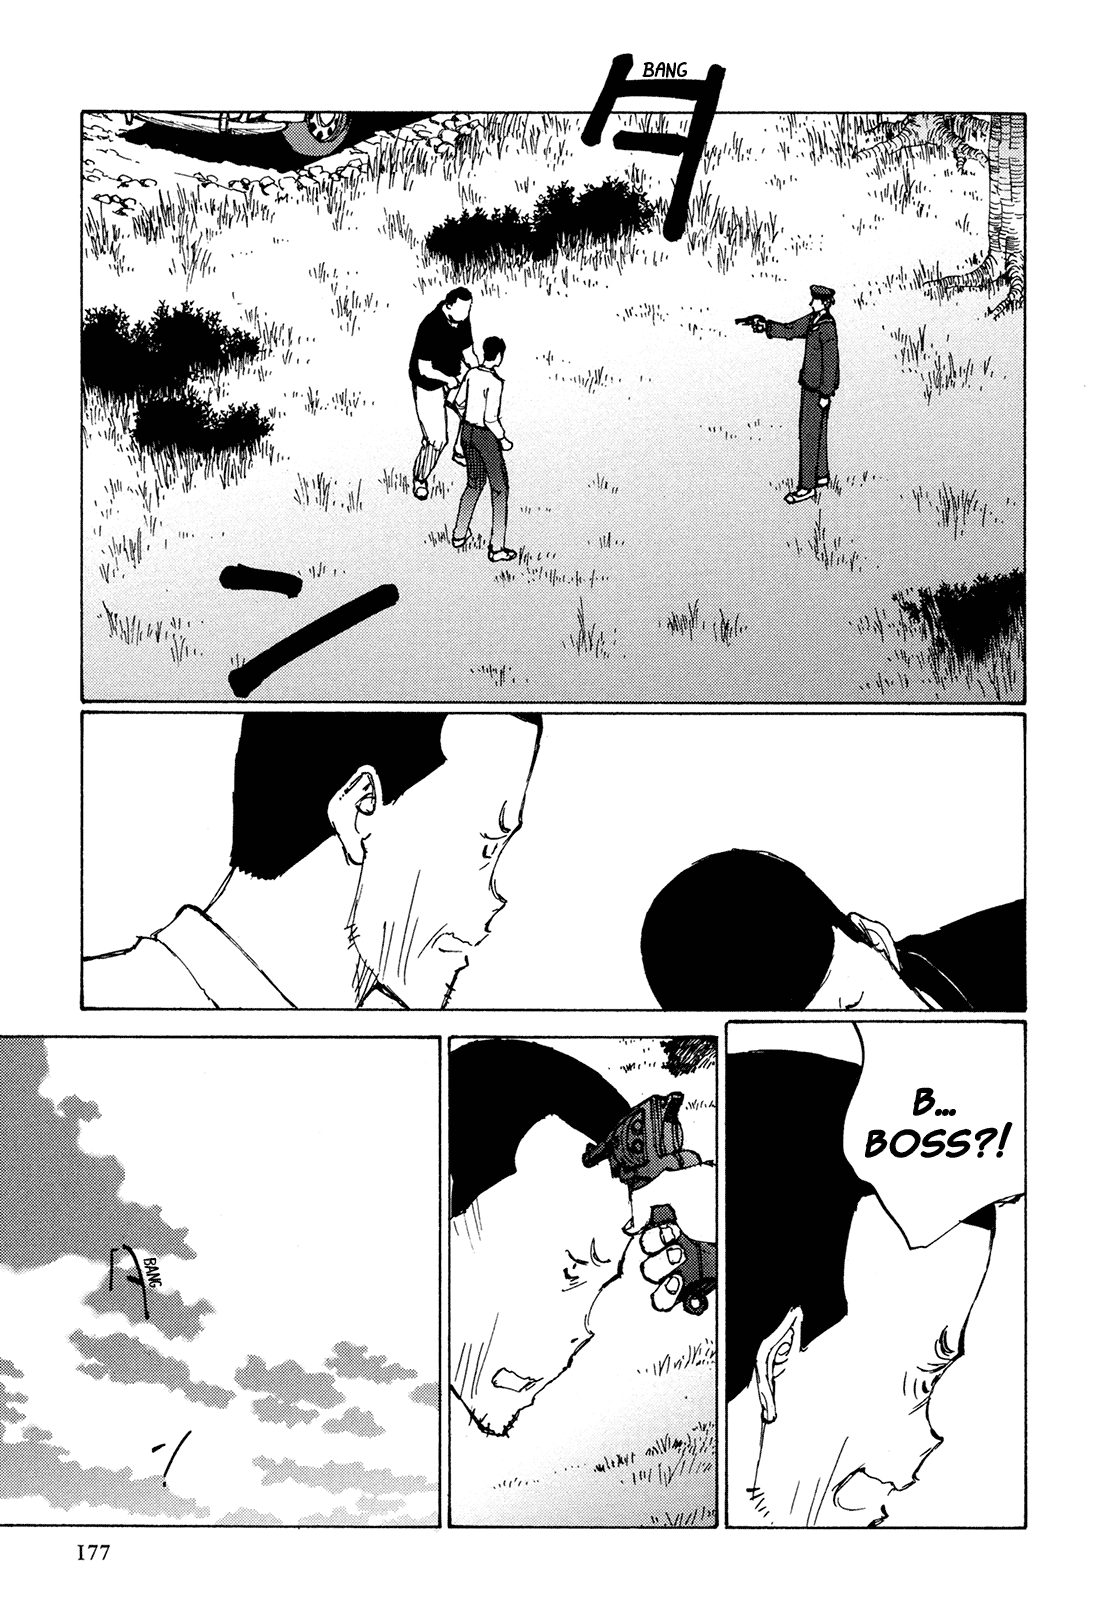 Futago no Teikoku Vol.1 Ch.6